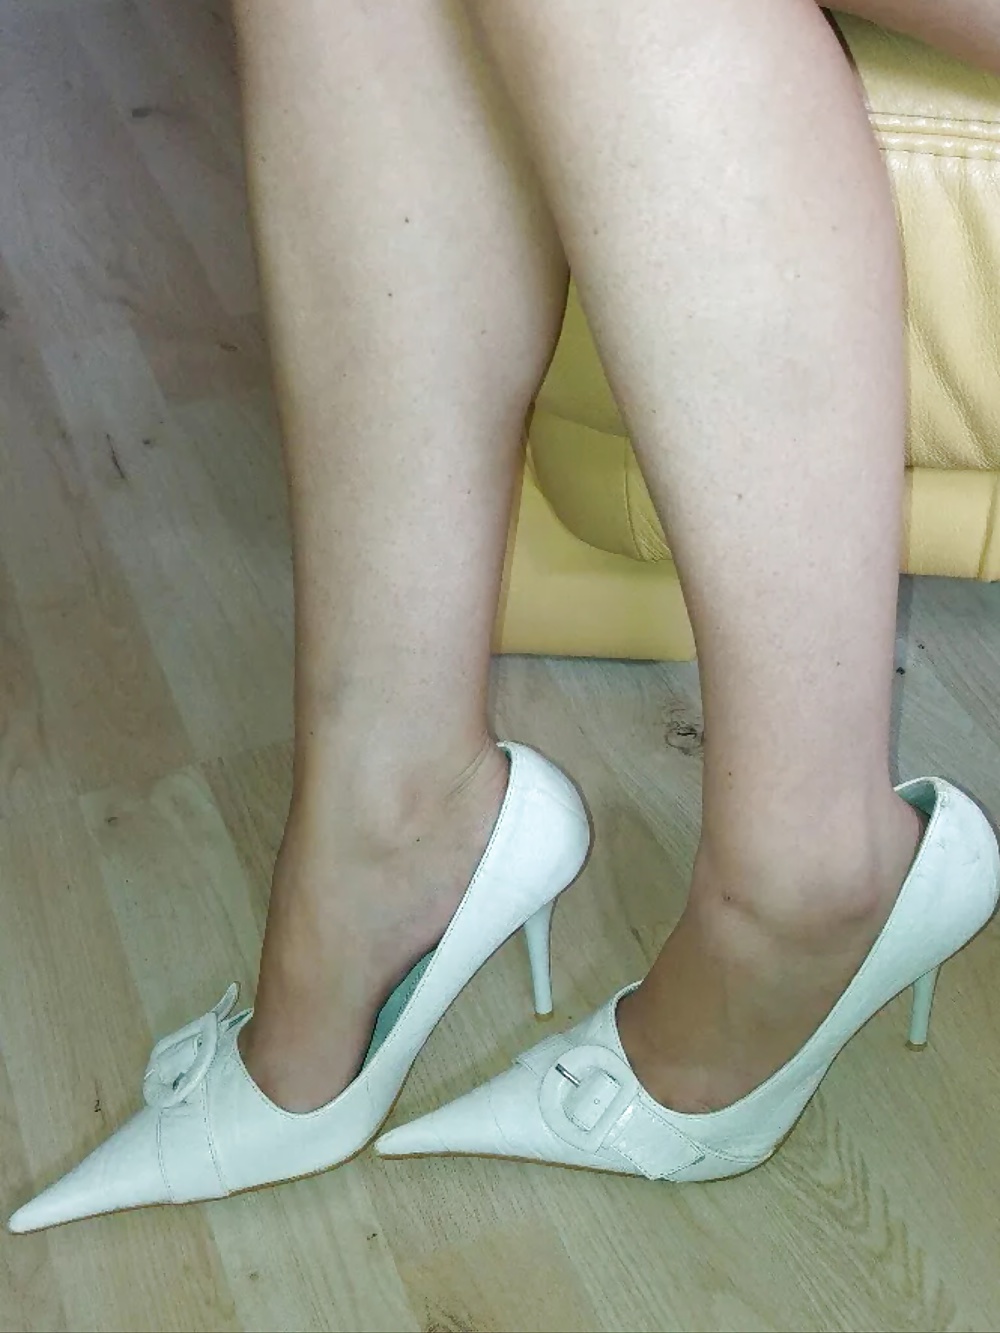 Porn image Legs & feet in sexy high heels part 2